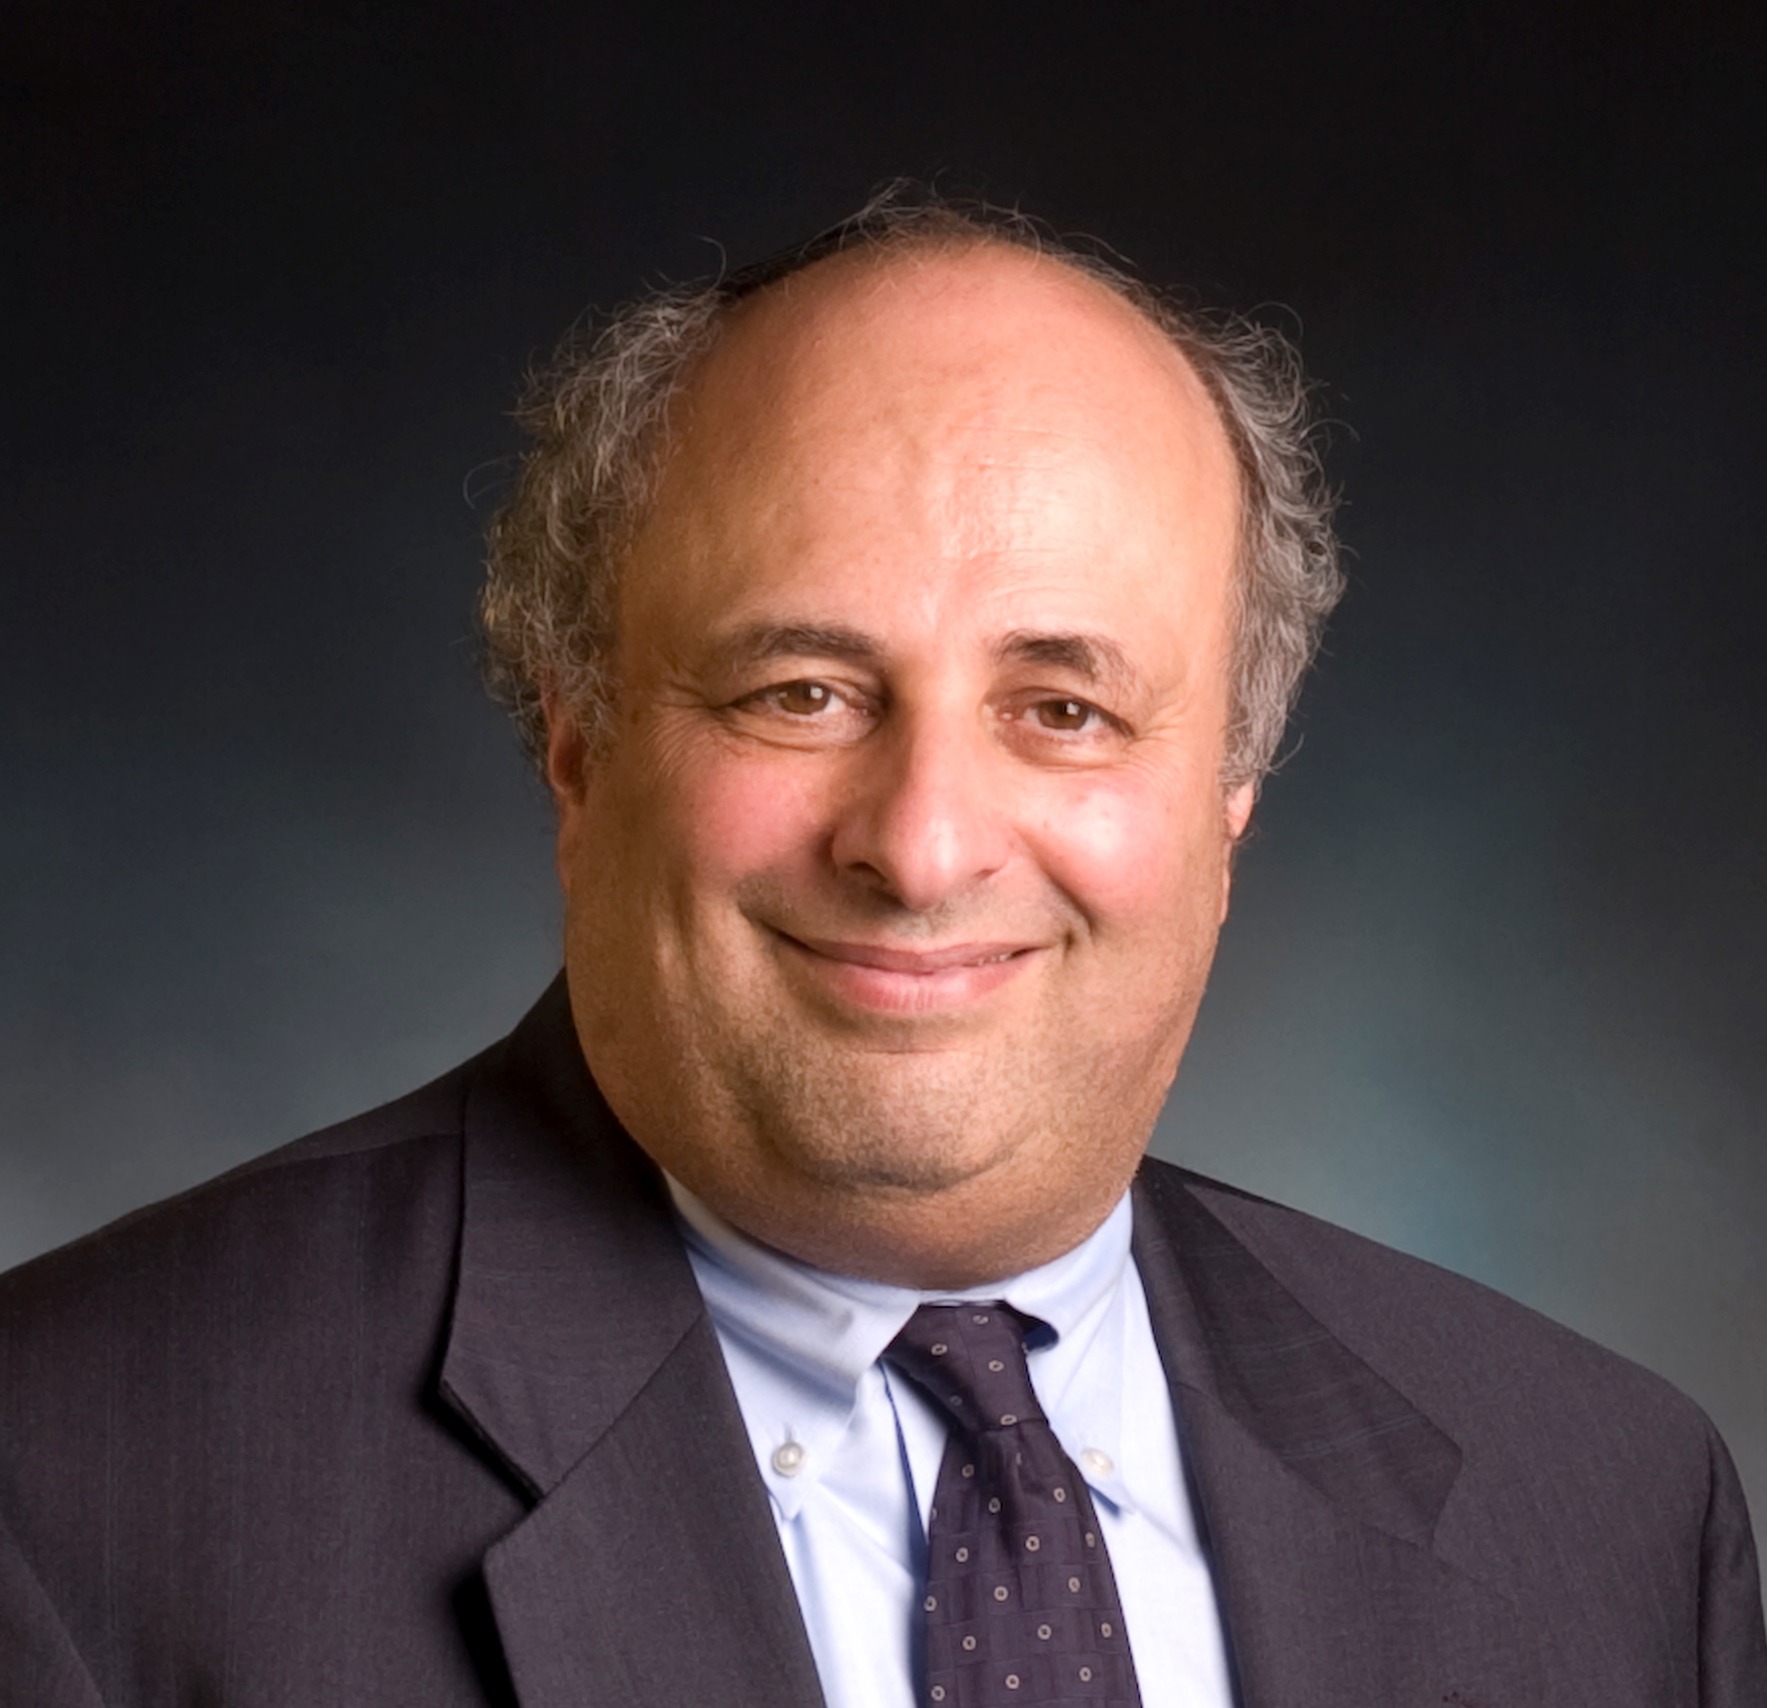 Dr. David Pelcovitz